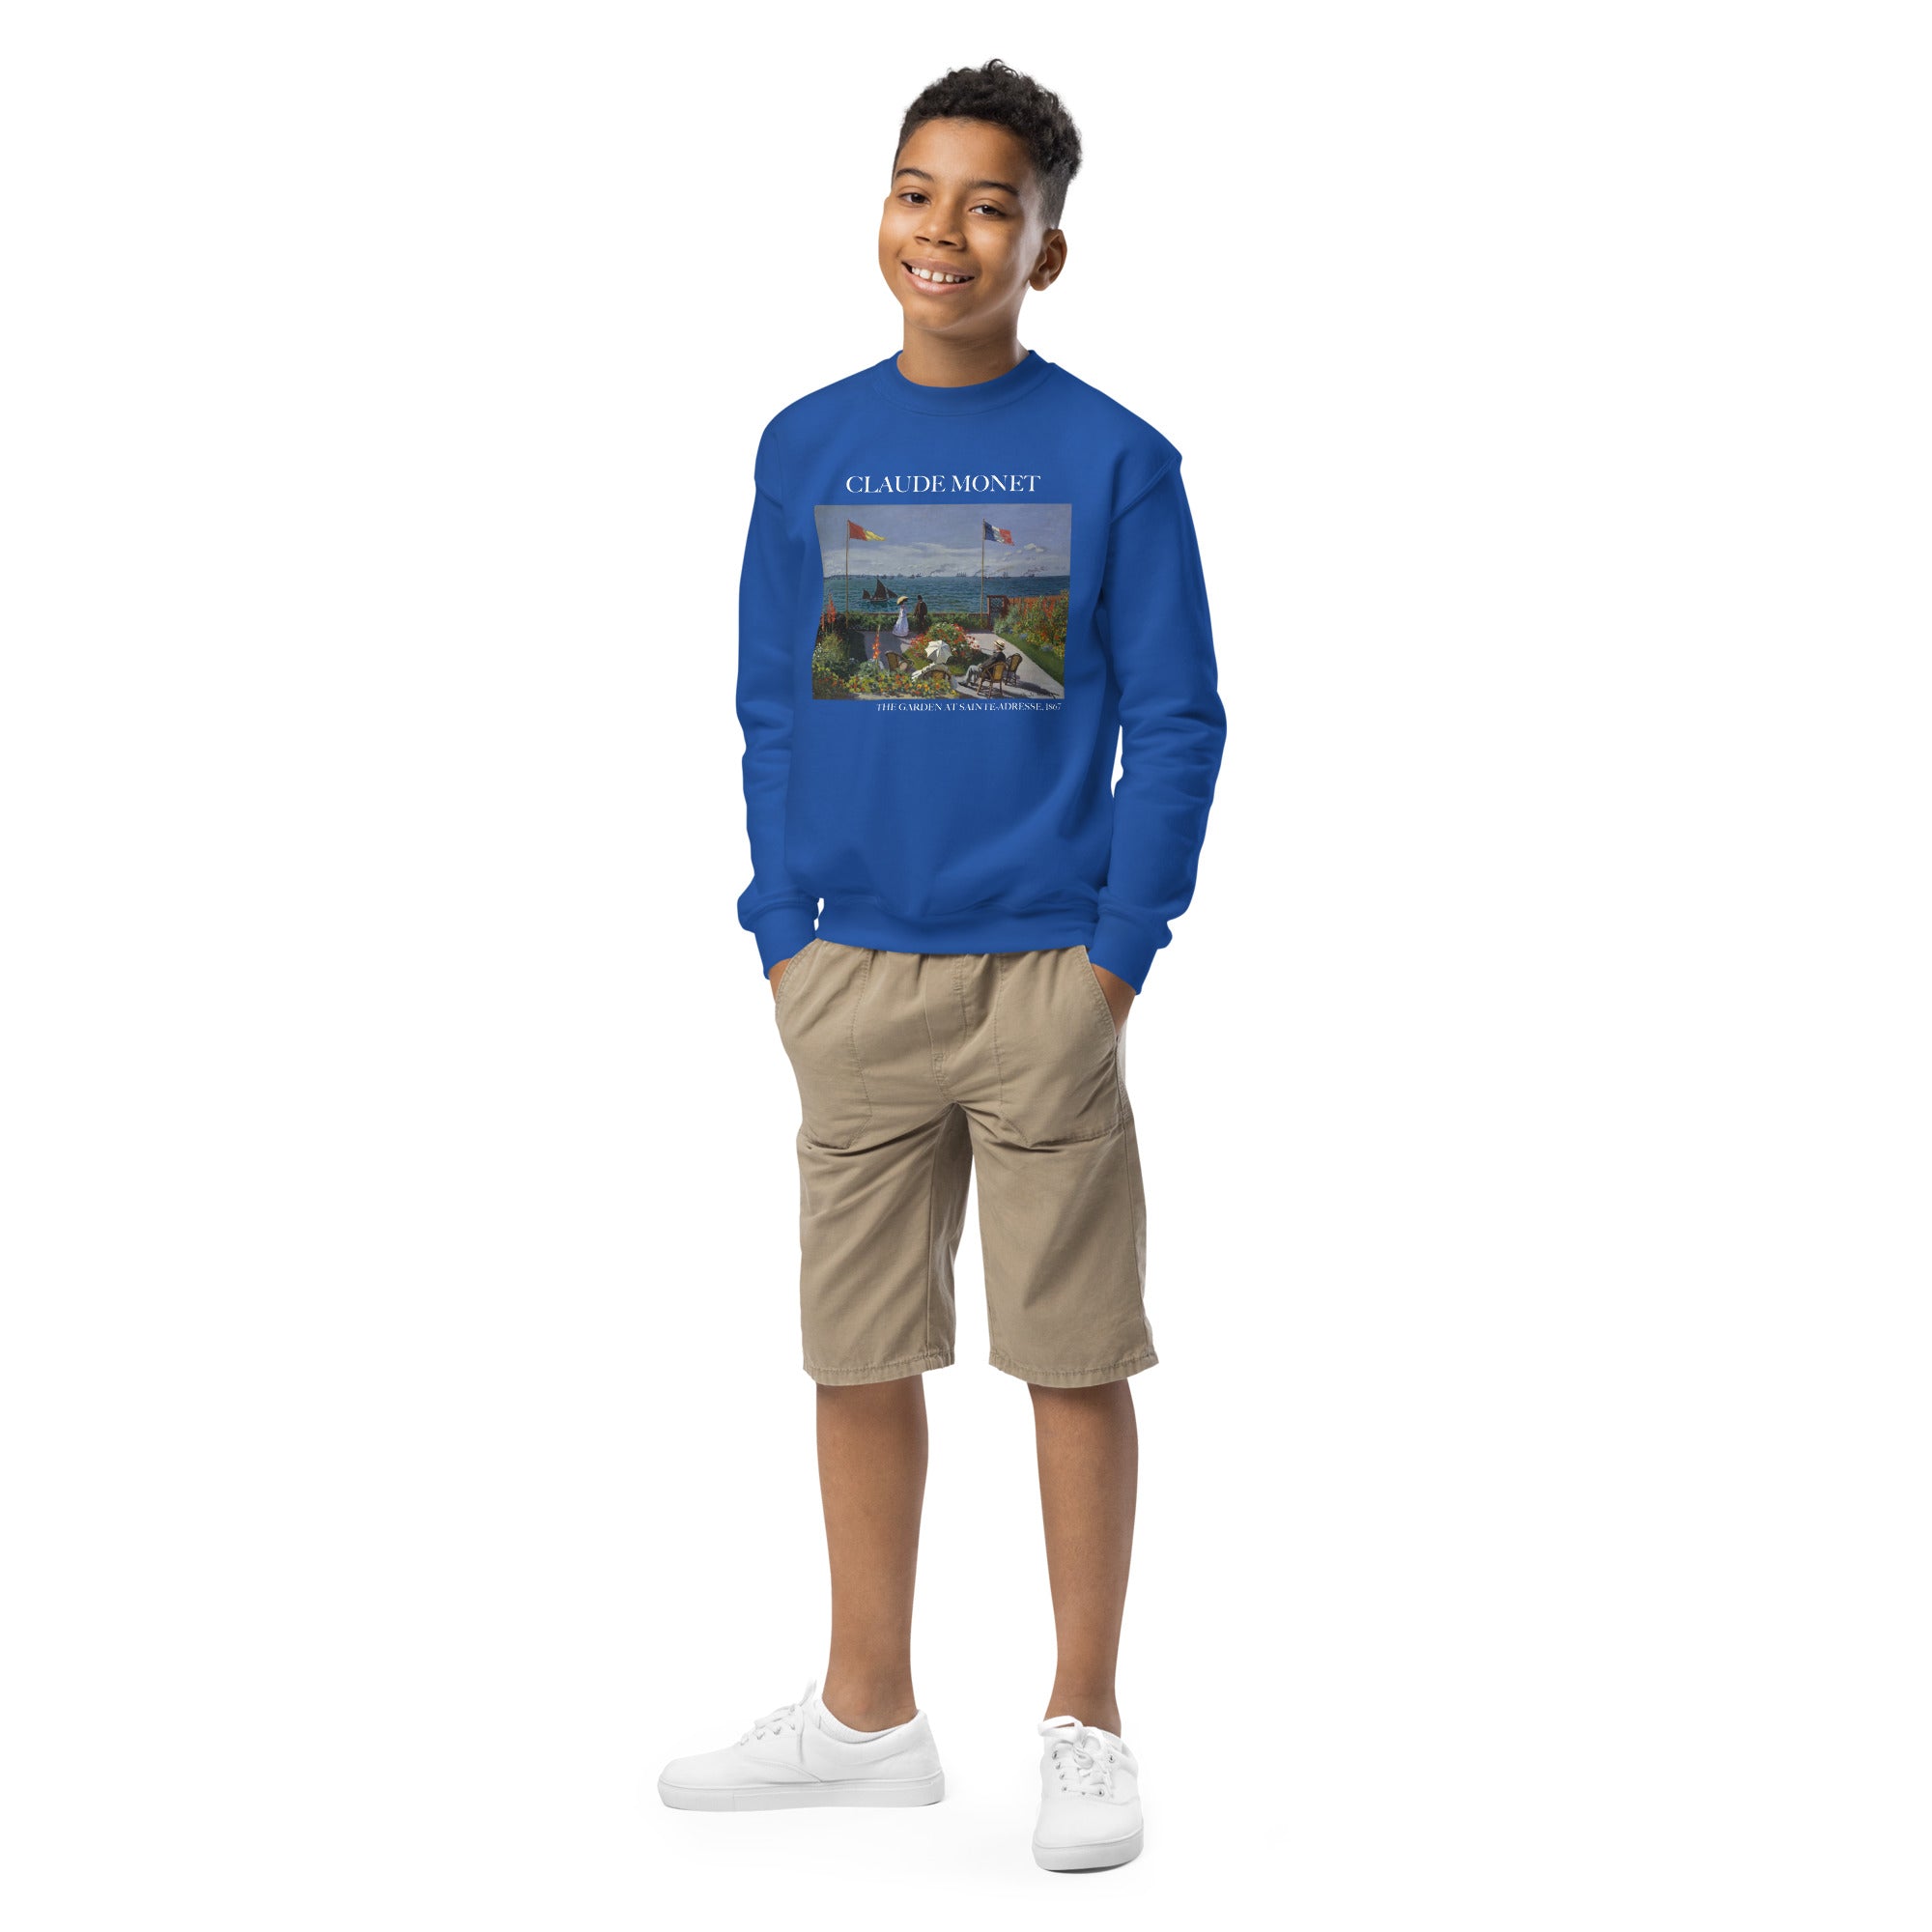 Claude Monet 'The Garden at Sainte-Adresse' Famous Painting Crewneck Sweatshirt | Premium Youth Art Sweatshirt